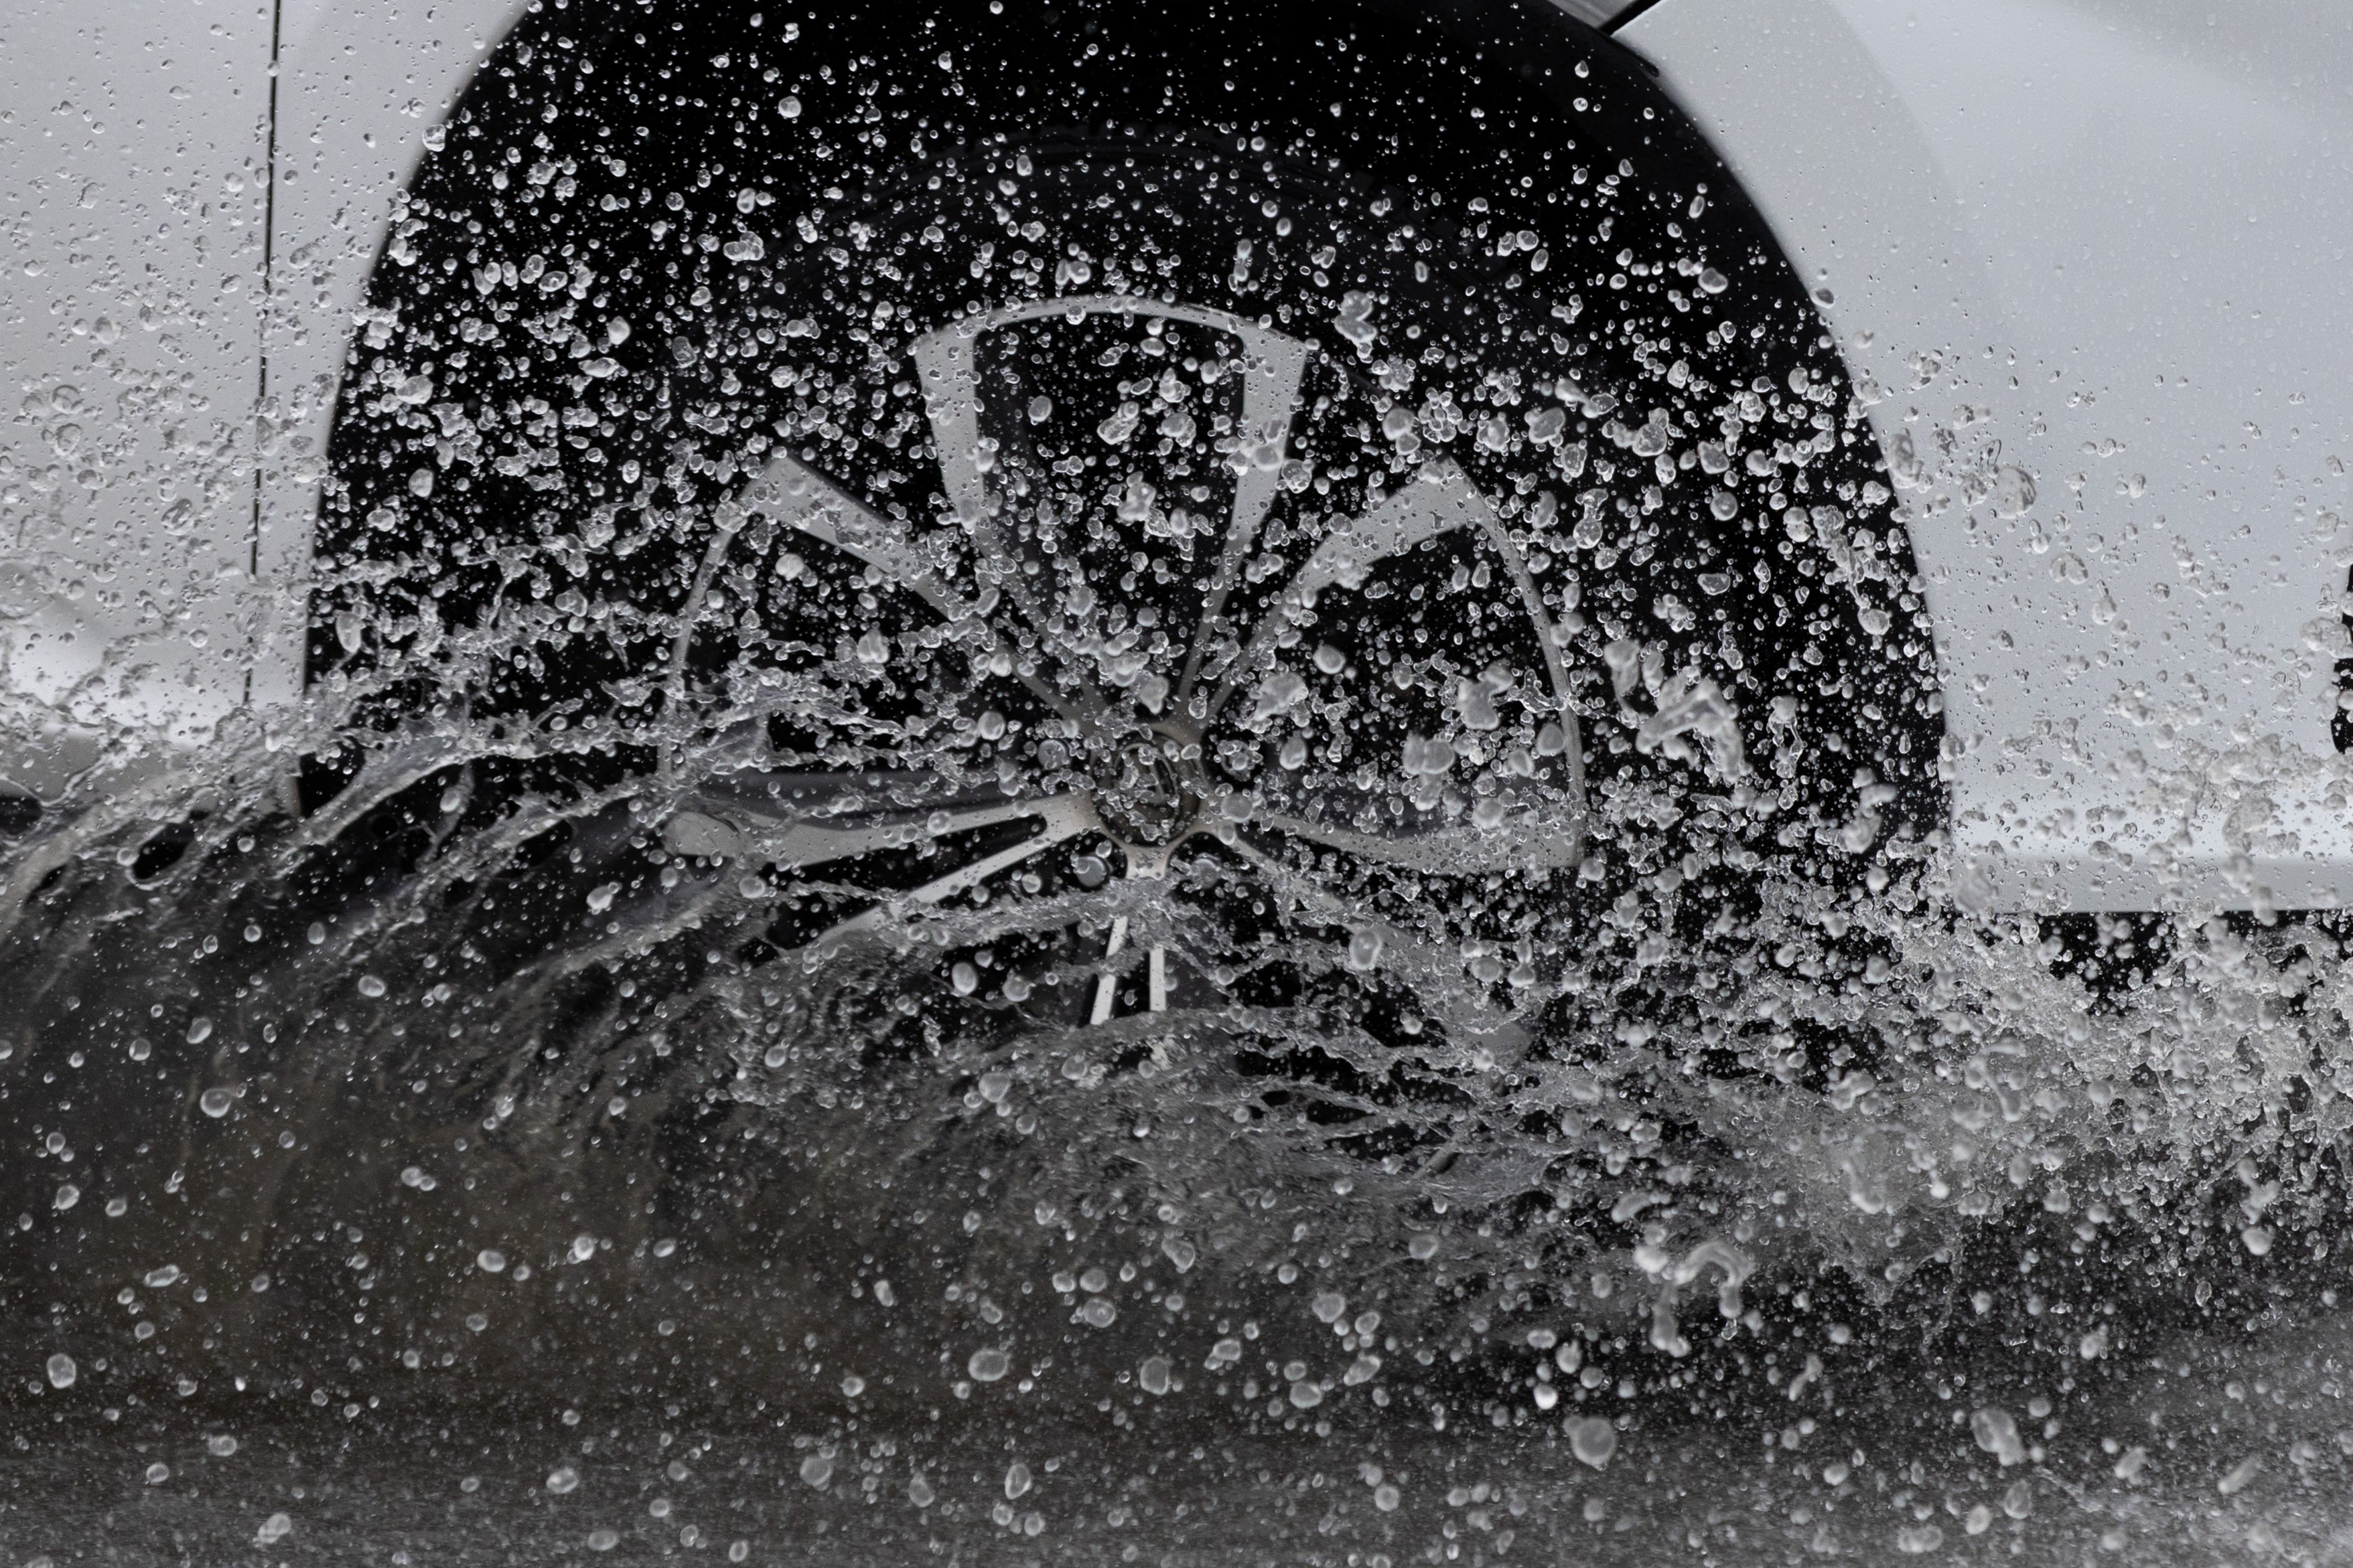 A car wheel is splashing through water, droplets frozen in motion.